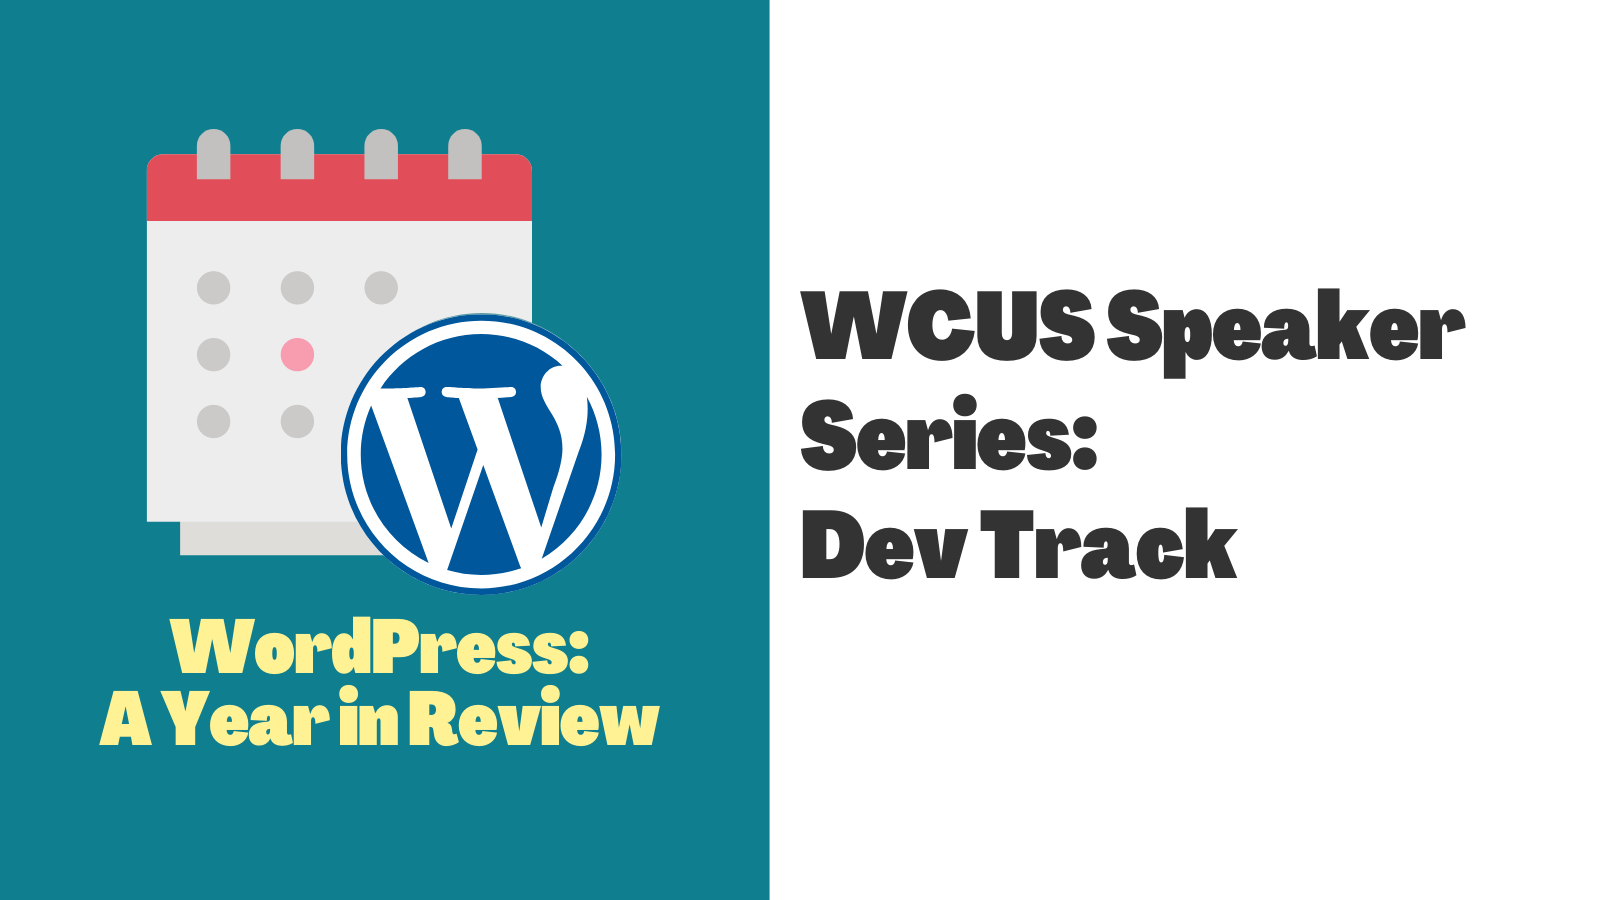 WCUS Speaker Series: Dev Track